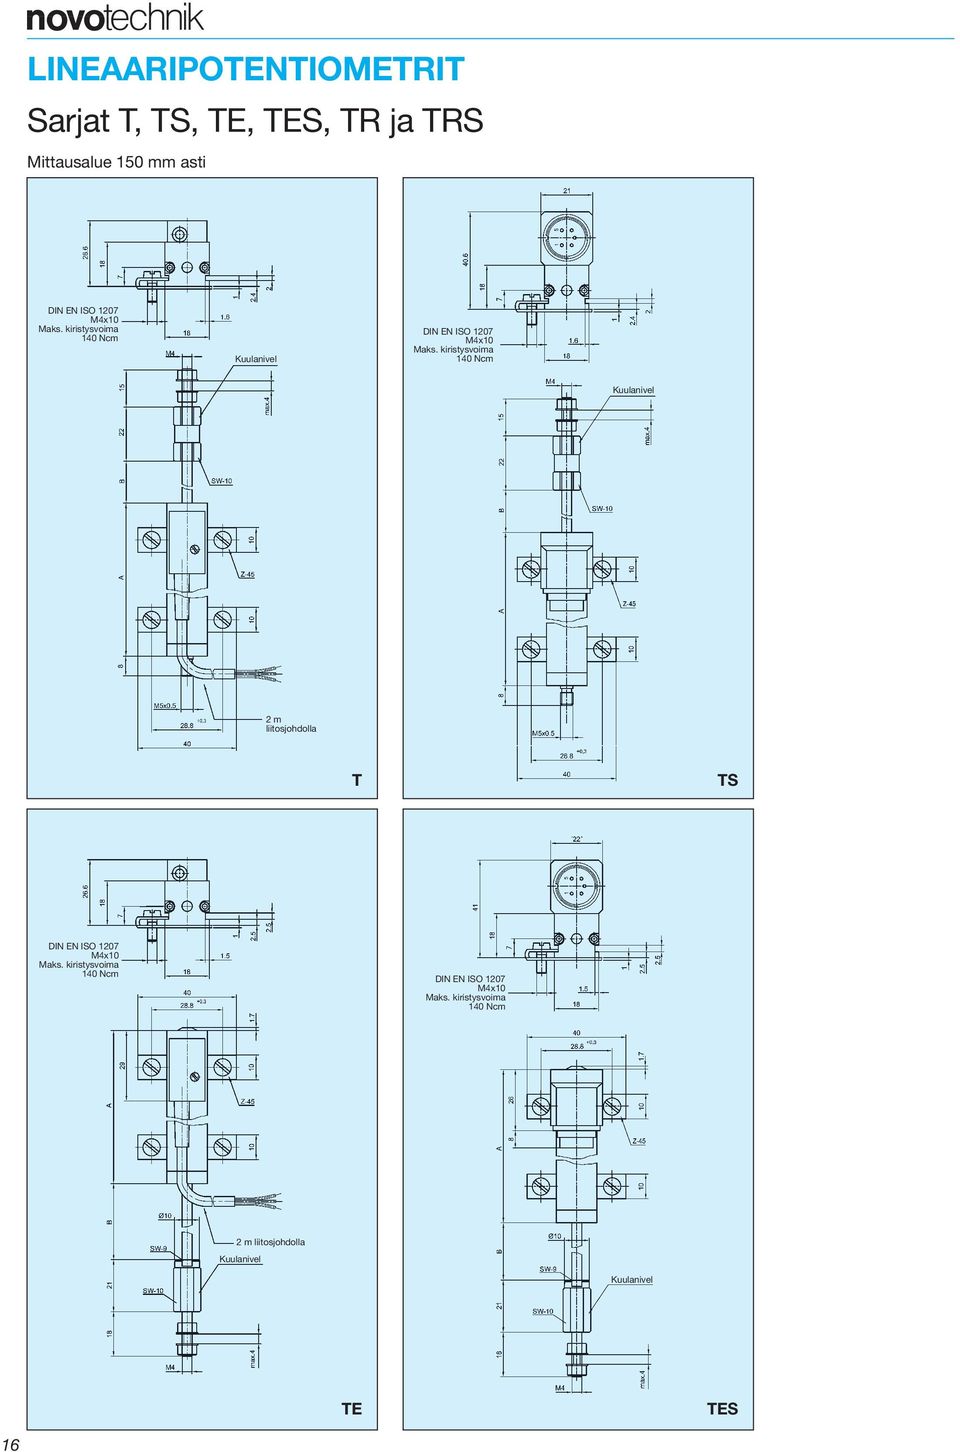 kiristysvoima 140 Ncm Kuulanivel 2 m liitosjohdolla T TS DIN EN ISO 1207 M4x10 Maks.